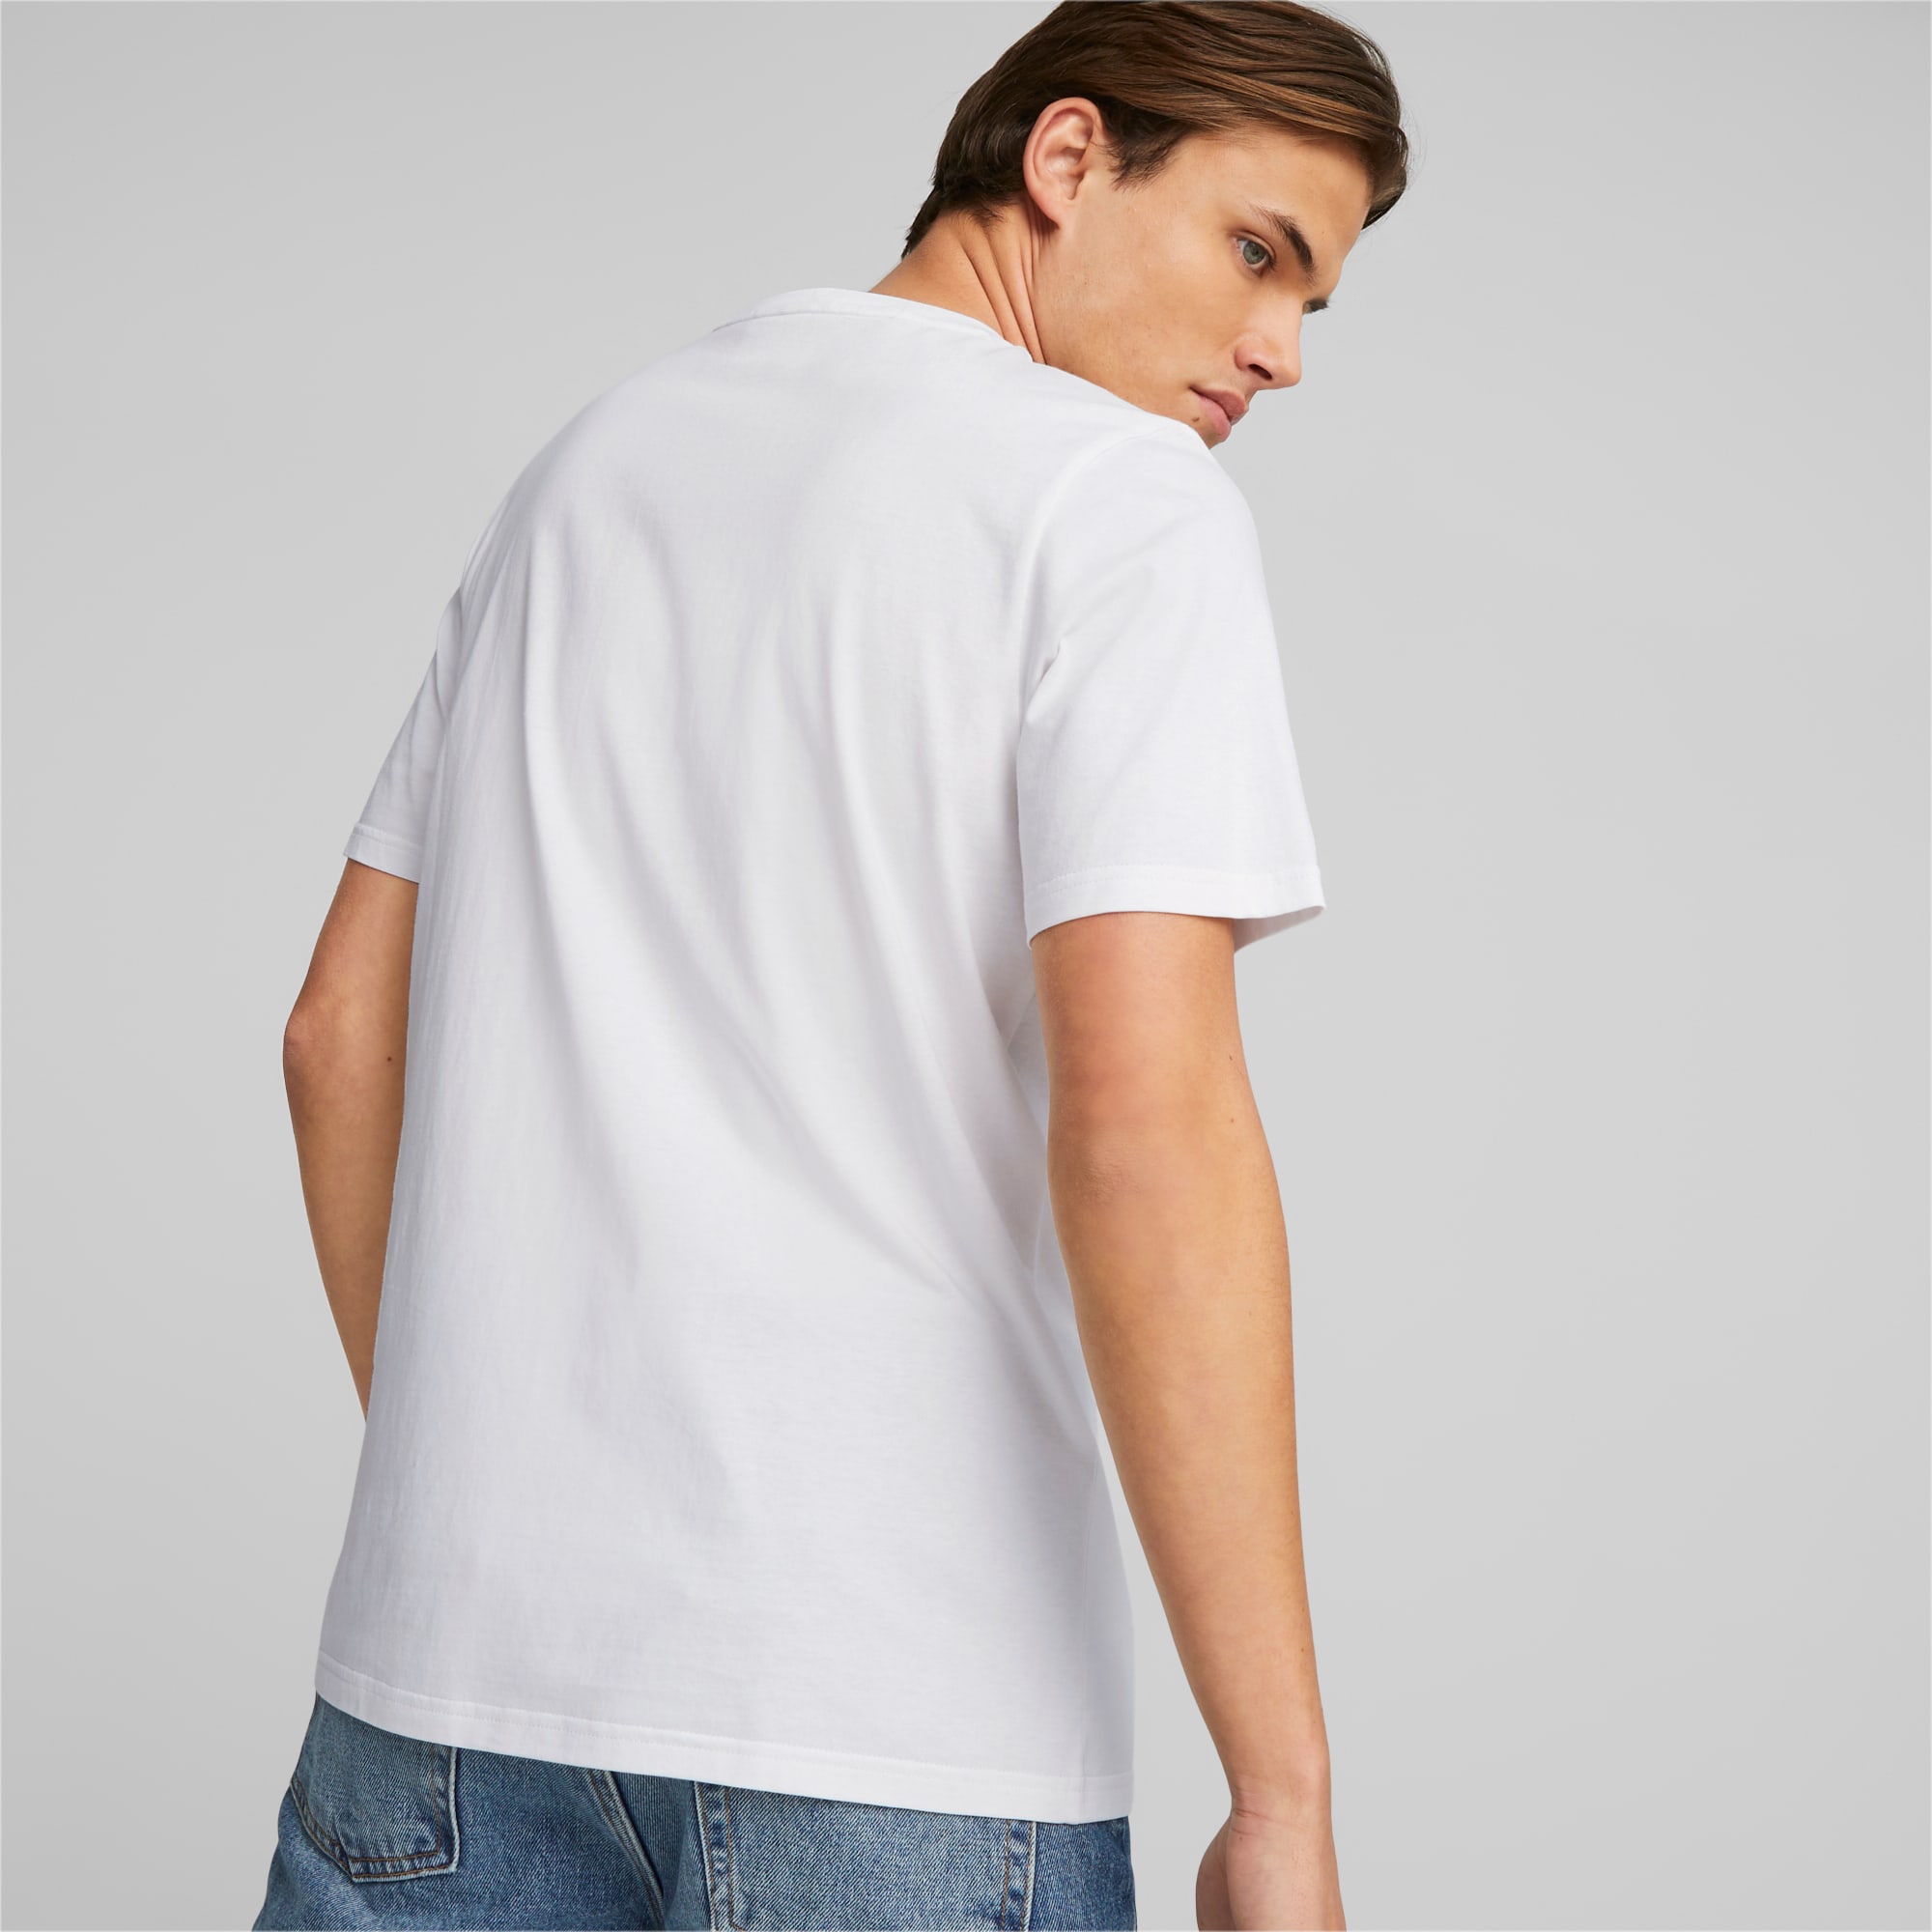 PUMA Classics Logo T-Shirt Men, White/Platinam Grey, Size XS, Clothing